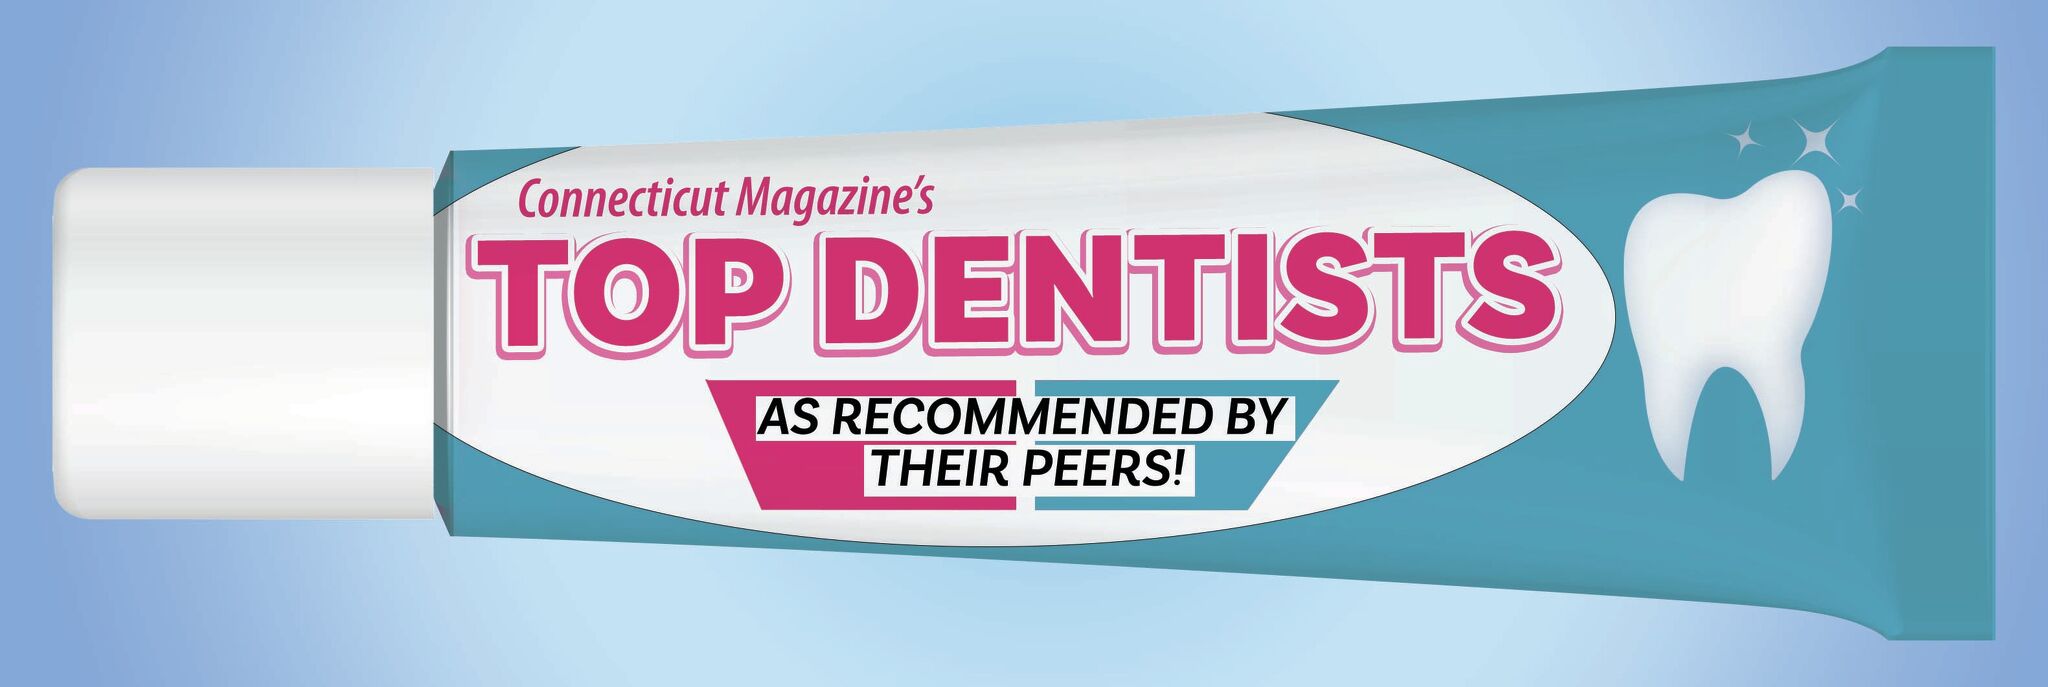 Connecticut Magazine's Top Dentists